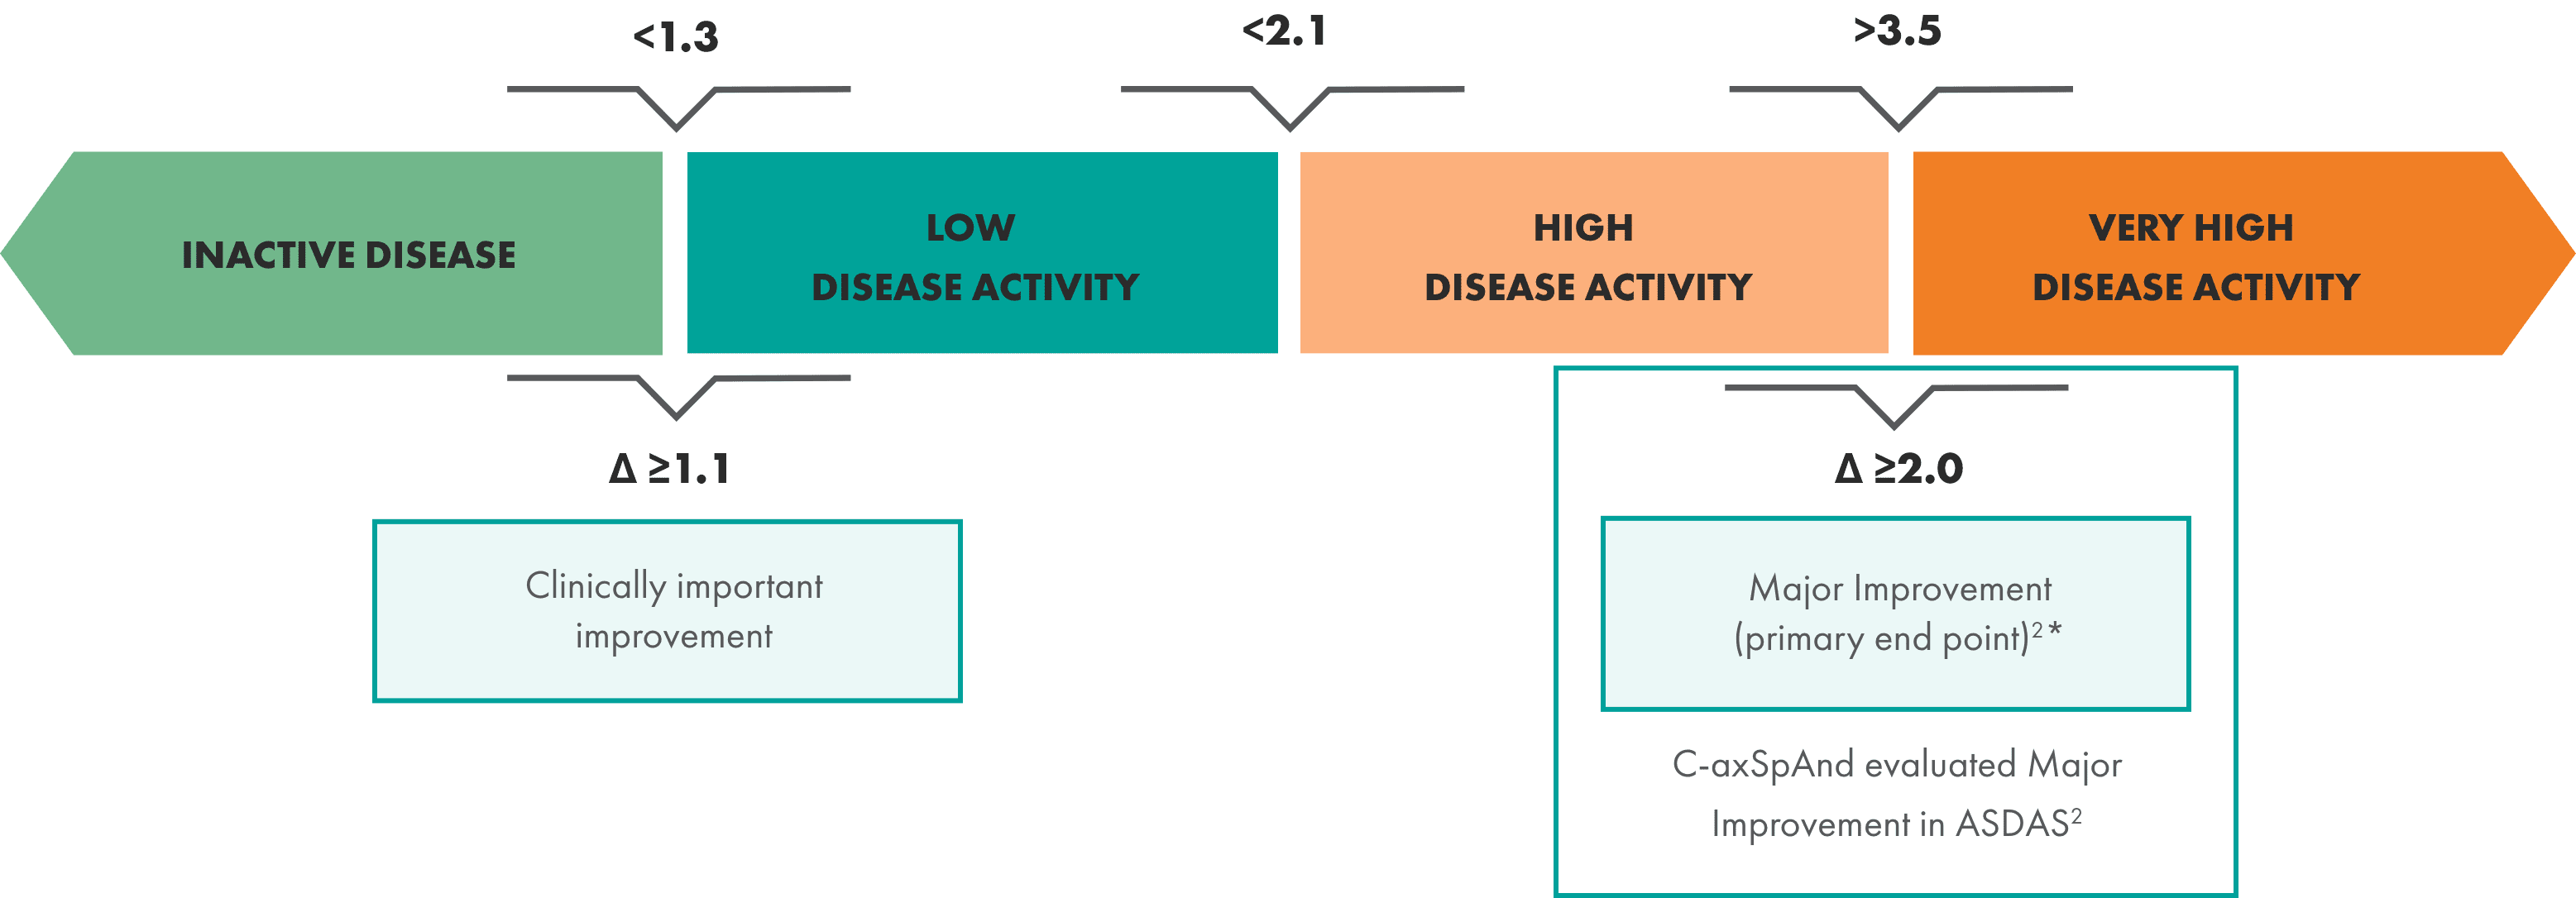 Disease activity measurement